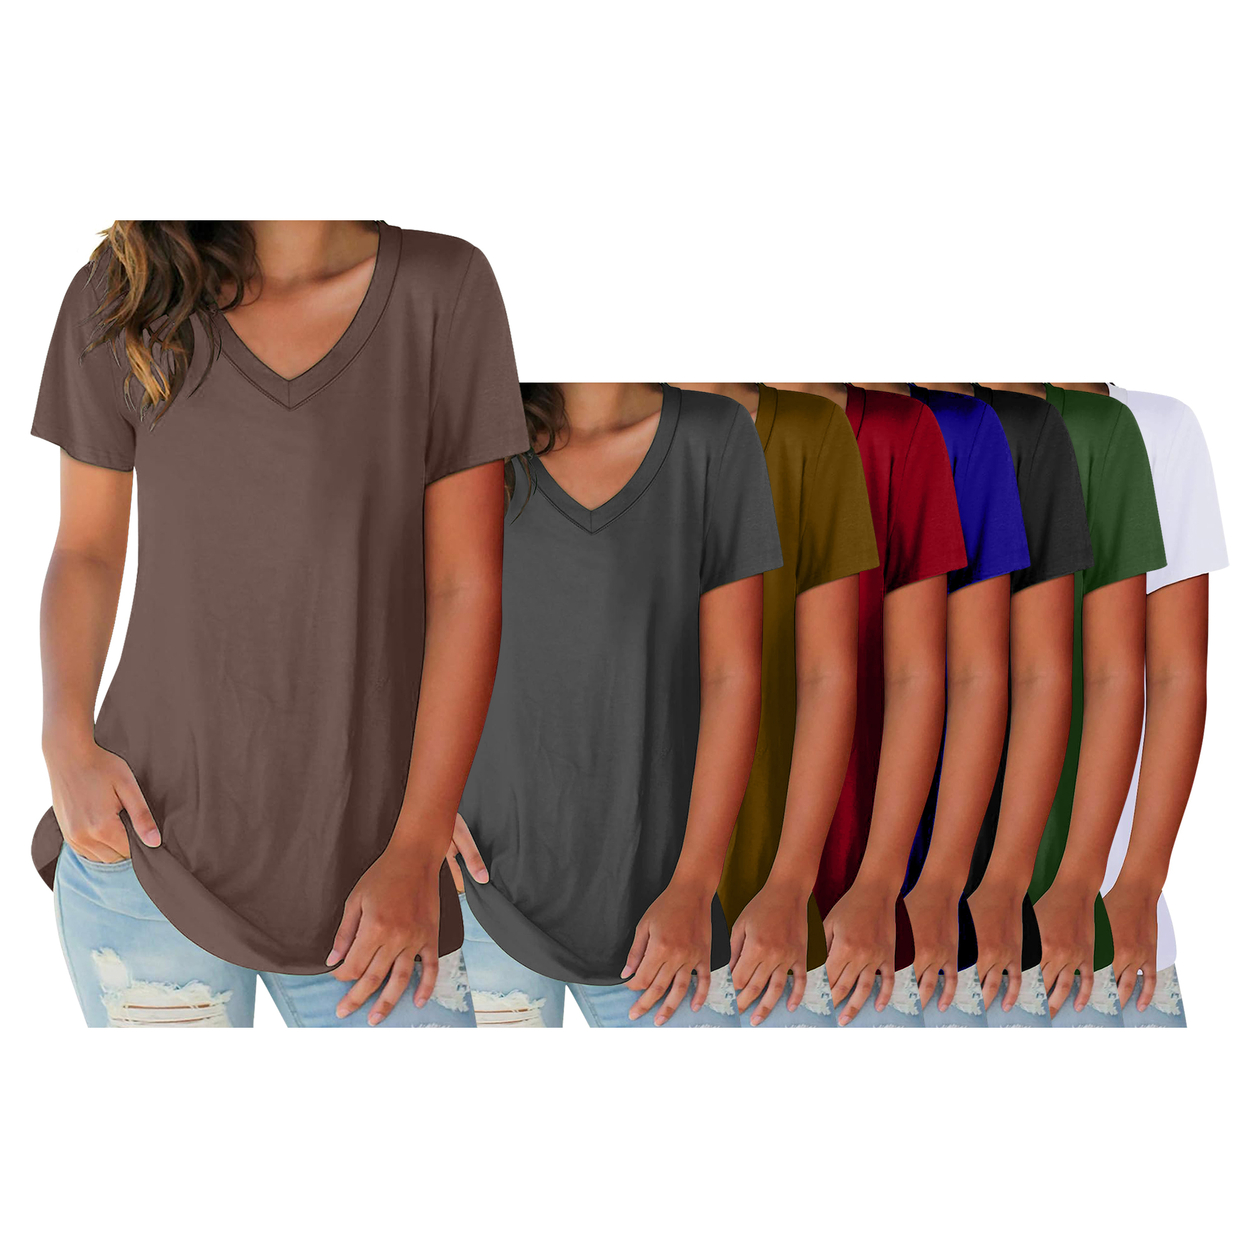 3-Pack: Women's Ultra Soft Smooth Cotton Blend Basic V-Neck Short Sleeve Shirts - Black, White, Brown, Xx-large